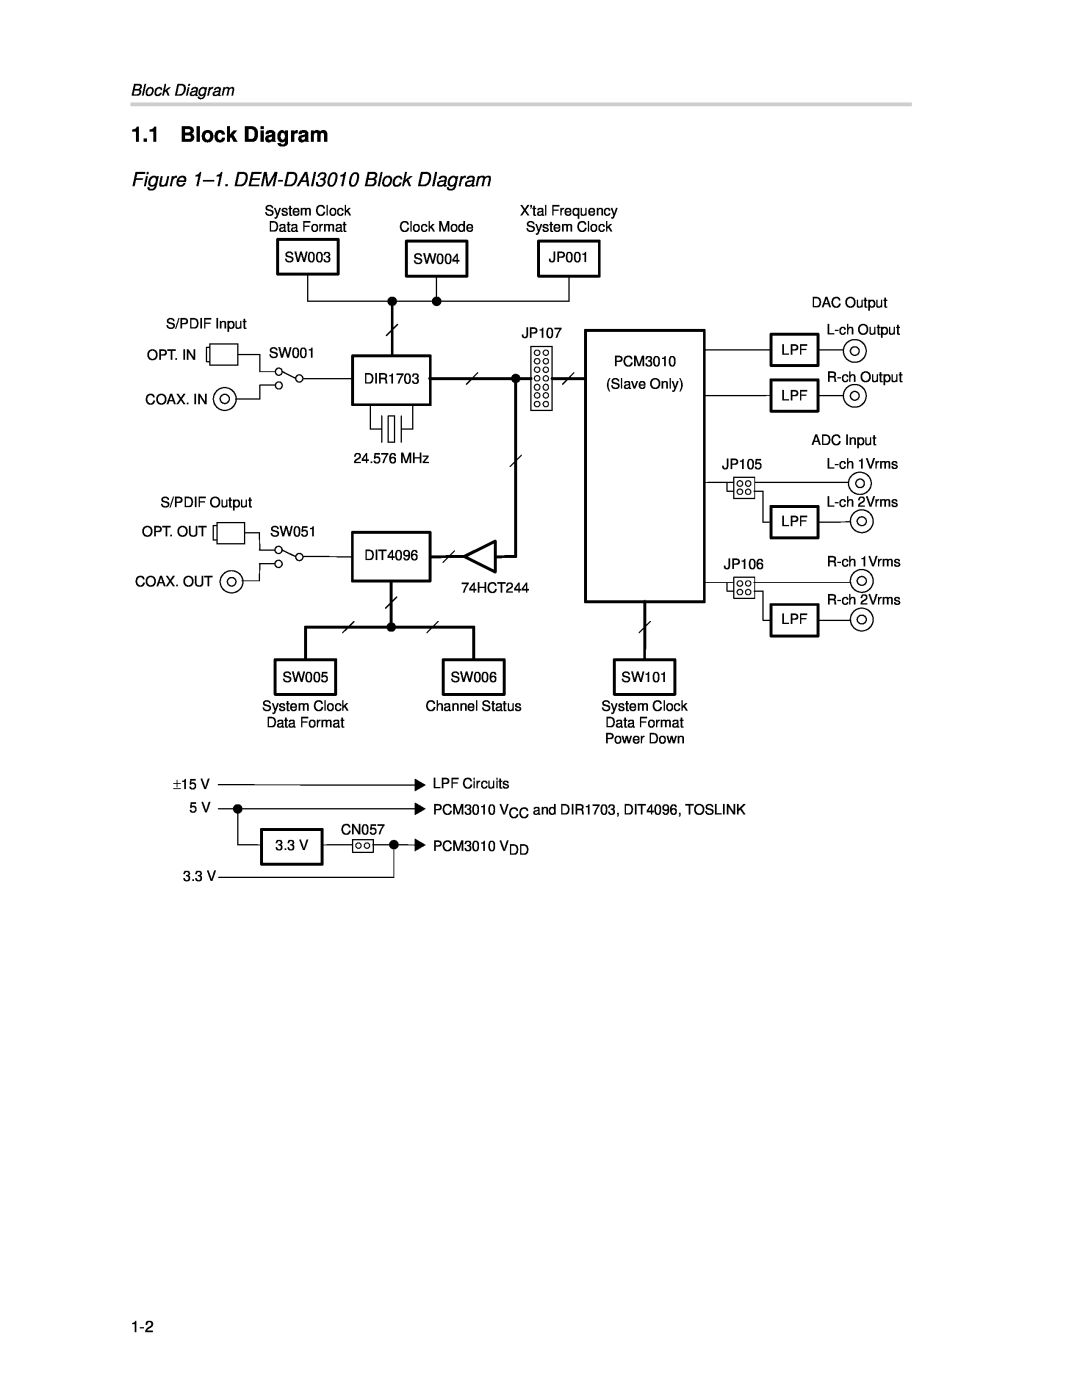 Texas Instruments manual Block Diagram, 1. DEM-DAI3010Block DIagram 